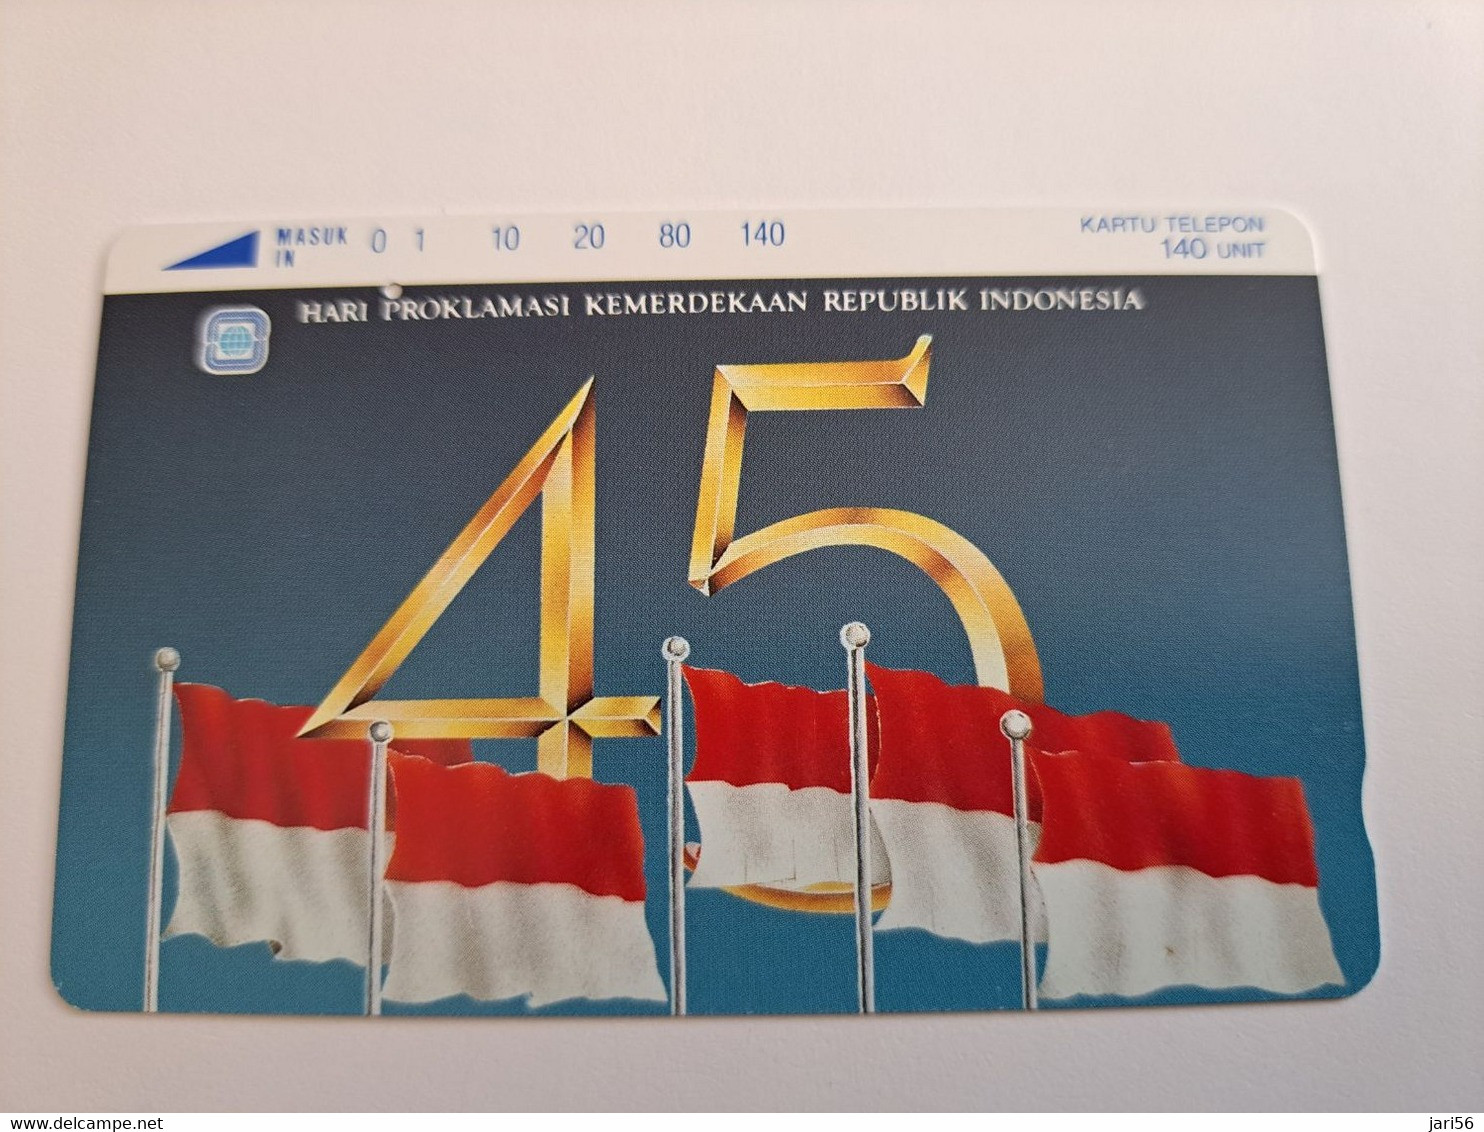 INDONESIA MAGNETIC/TAMURA  140  UNITS /   HARI PROLAMASI KEMERDEKAAN REP INDONESIA     MAGNETIC   CARD    **9796** - Indonesië